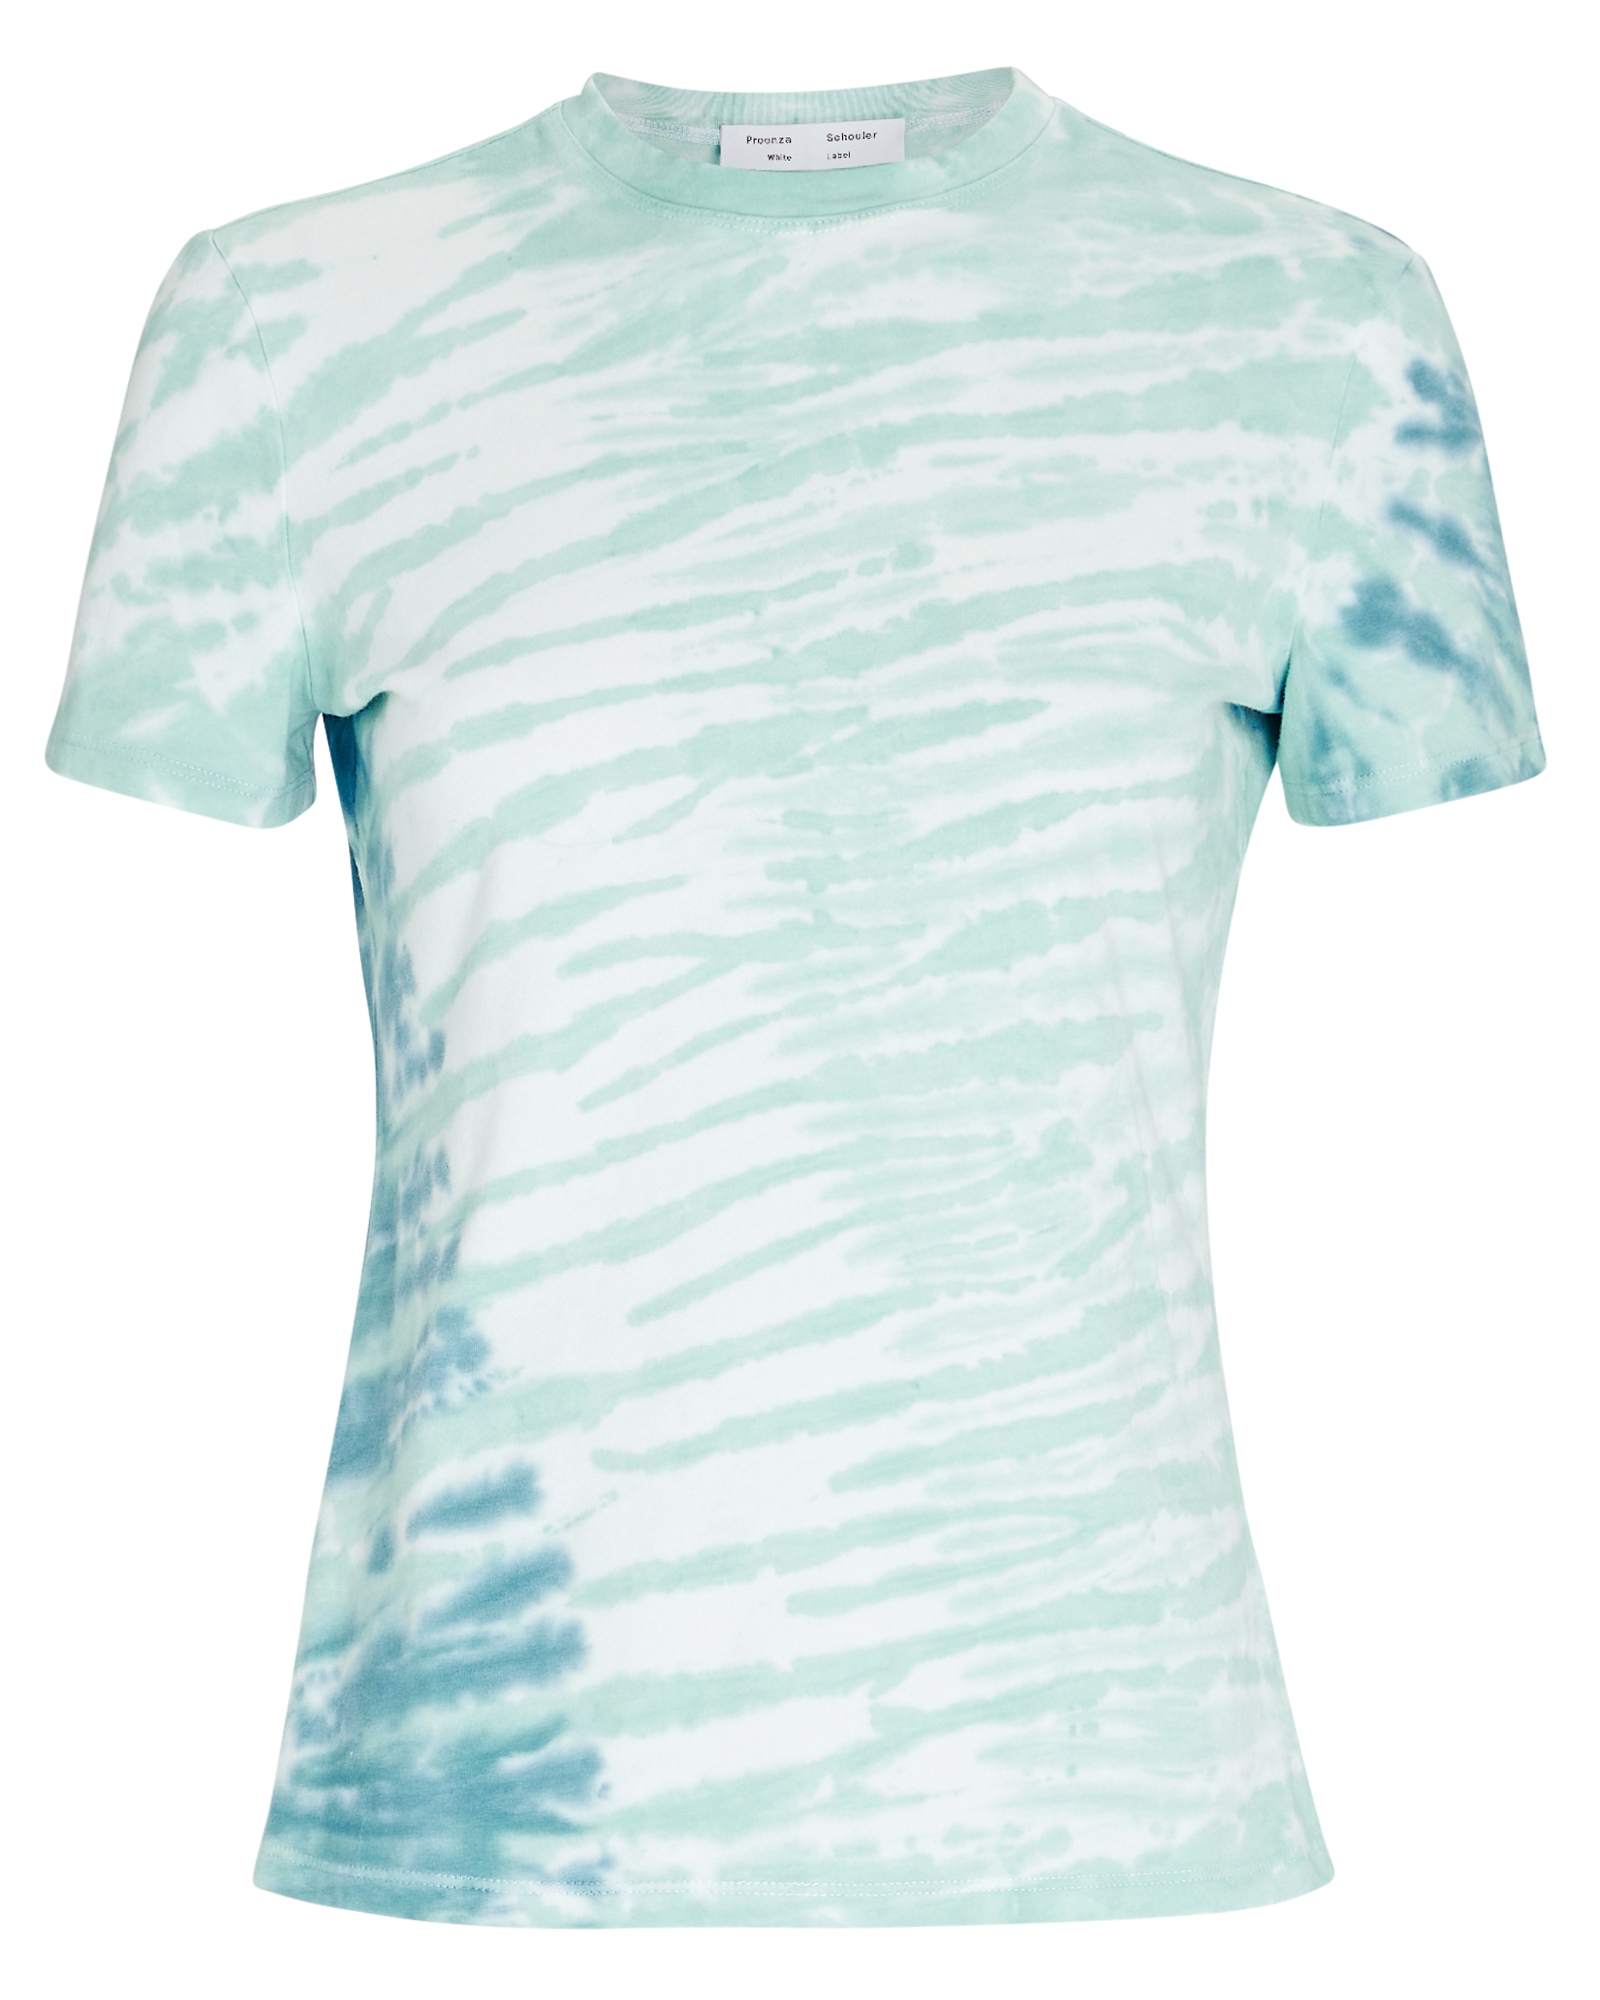 Proenza Schouler White Label Tie-Dye Cotton T-Shirt | INTERMIX®